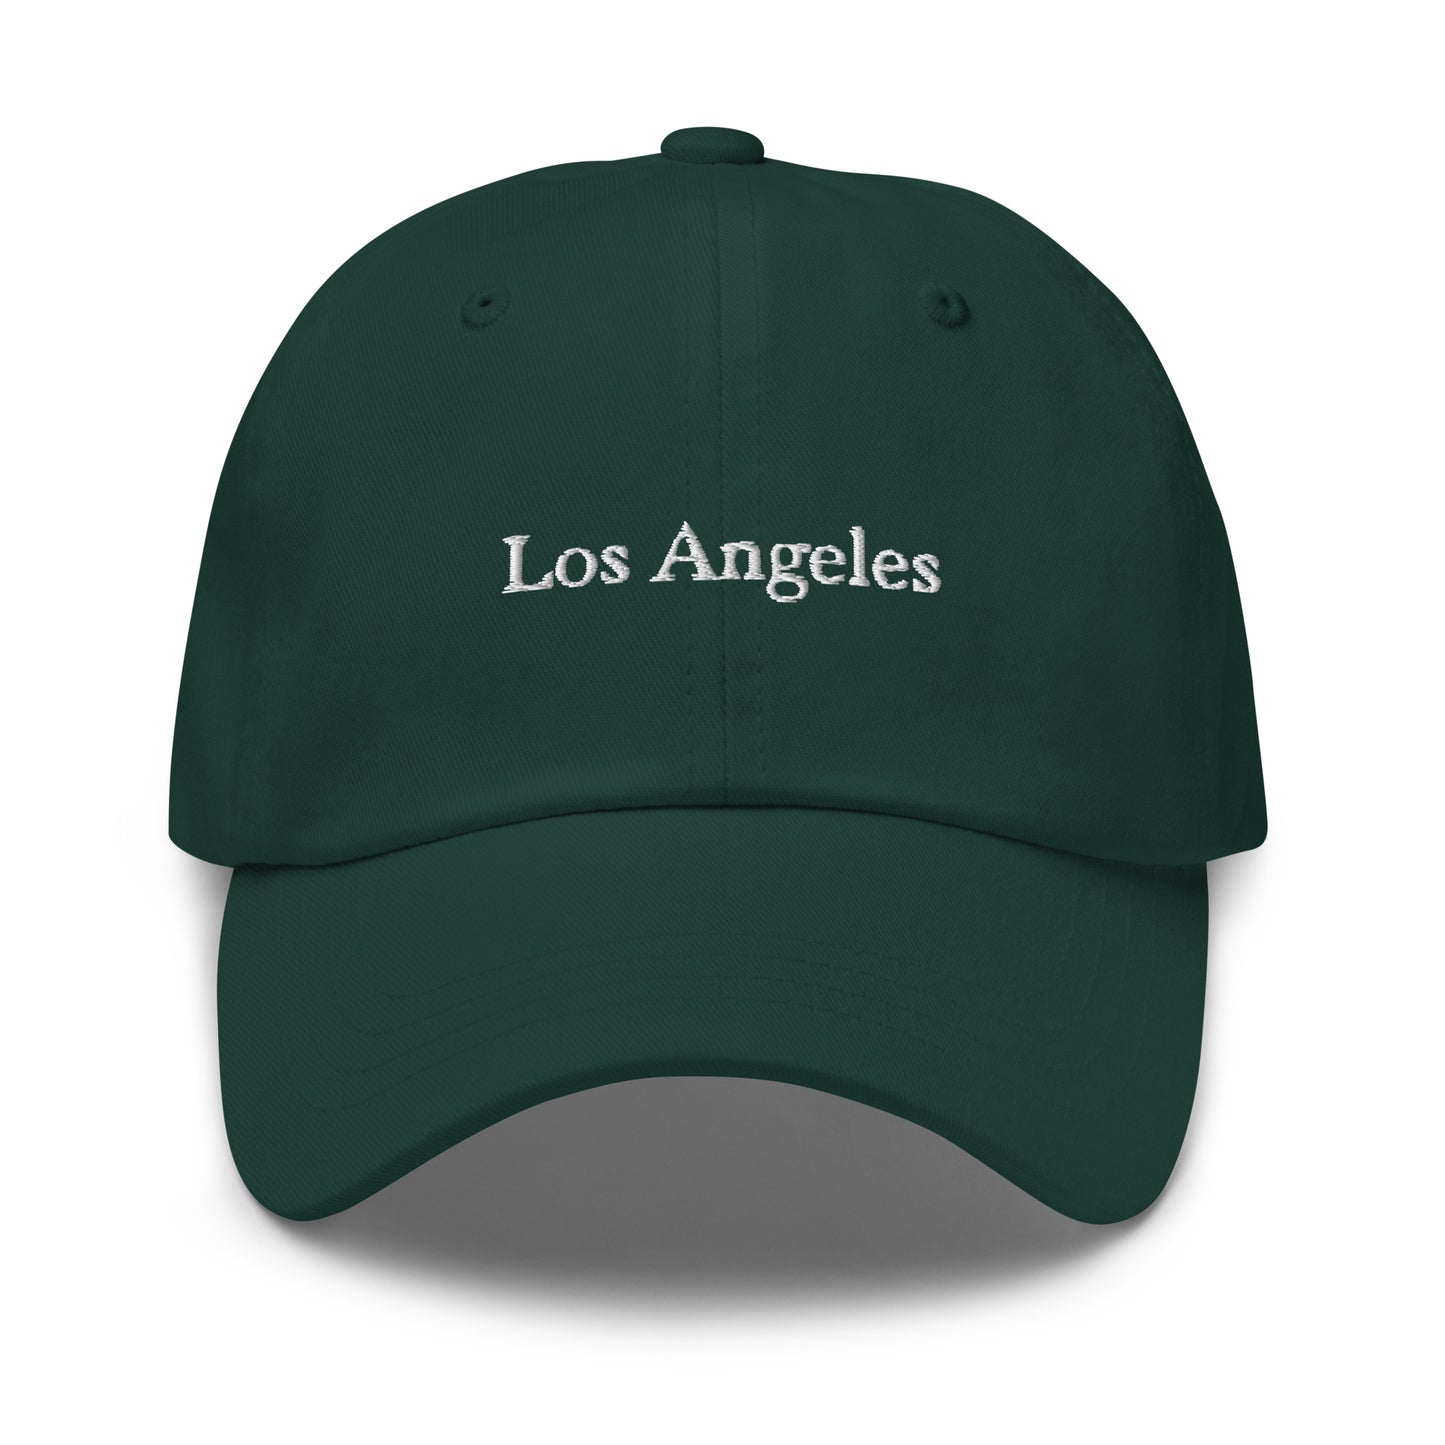 Los Angeles Baseball Cap